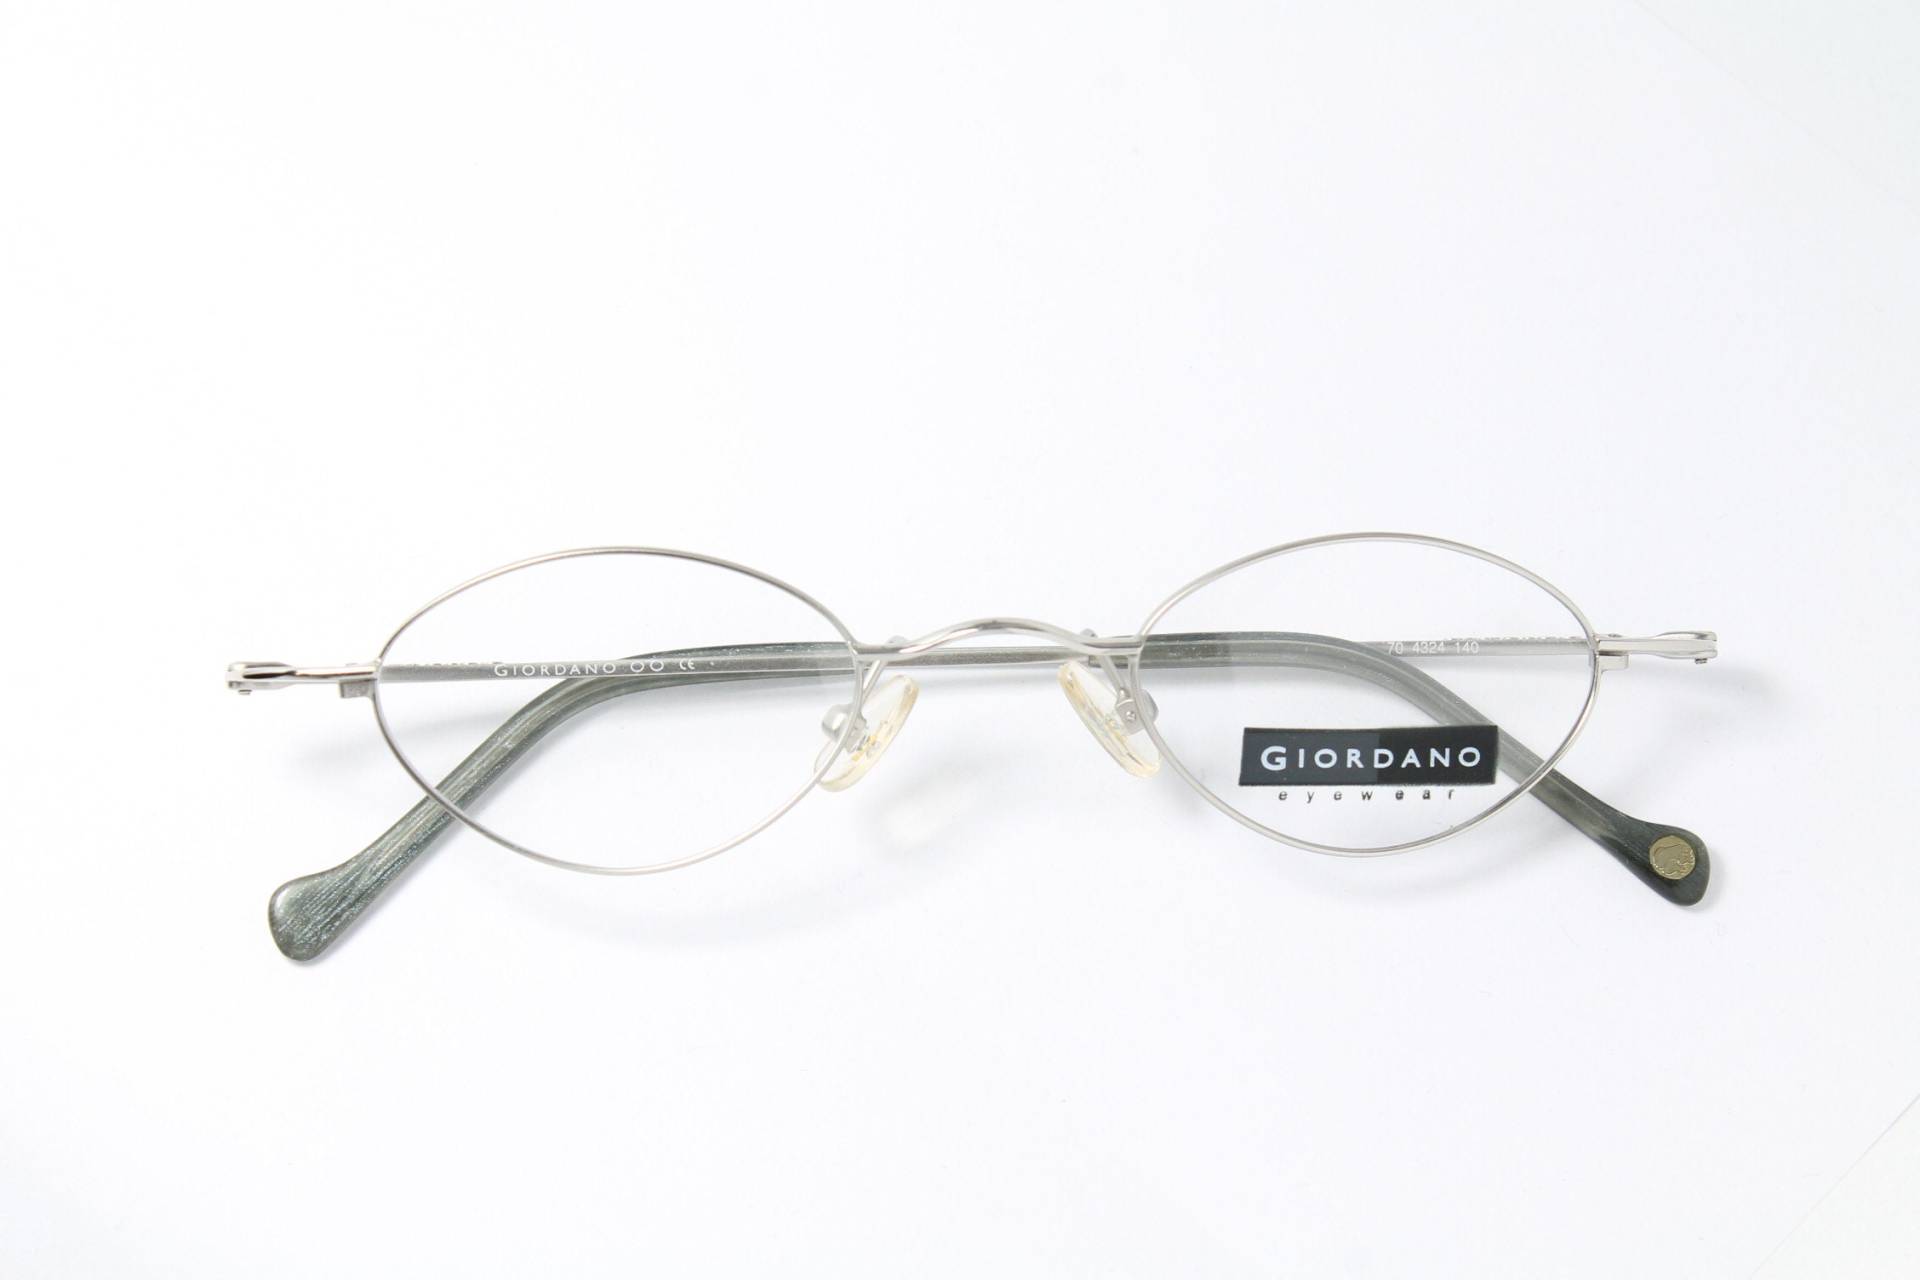 Micro Silber Oval Giordano Ga0275 Kleine Gläser Rare Unikat True Vintage Brillengestell Glasses Lunettes Occhiali Gafas Bril Glasögon E08 von VintageGermanGlasses